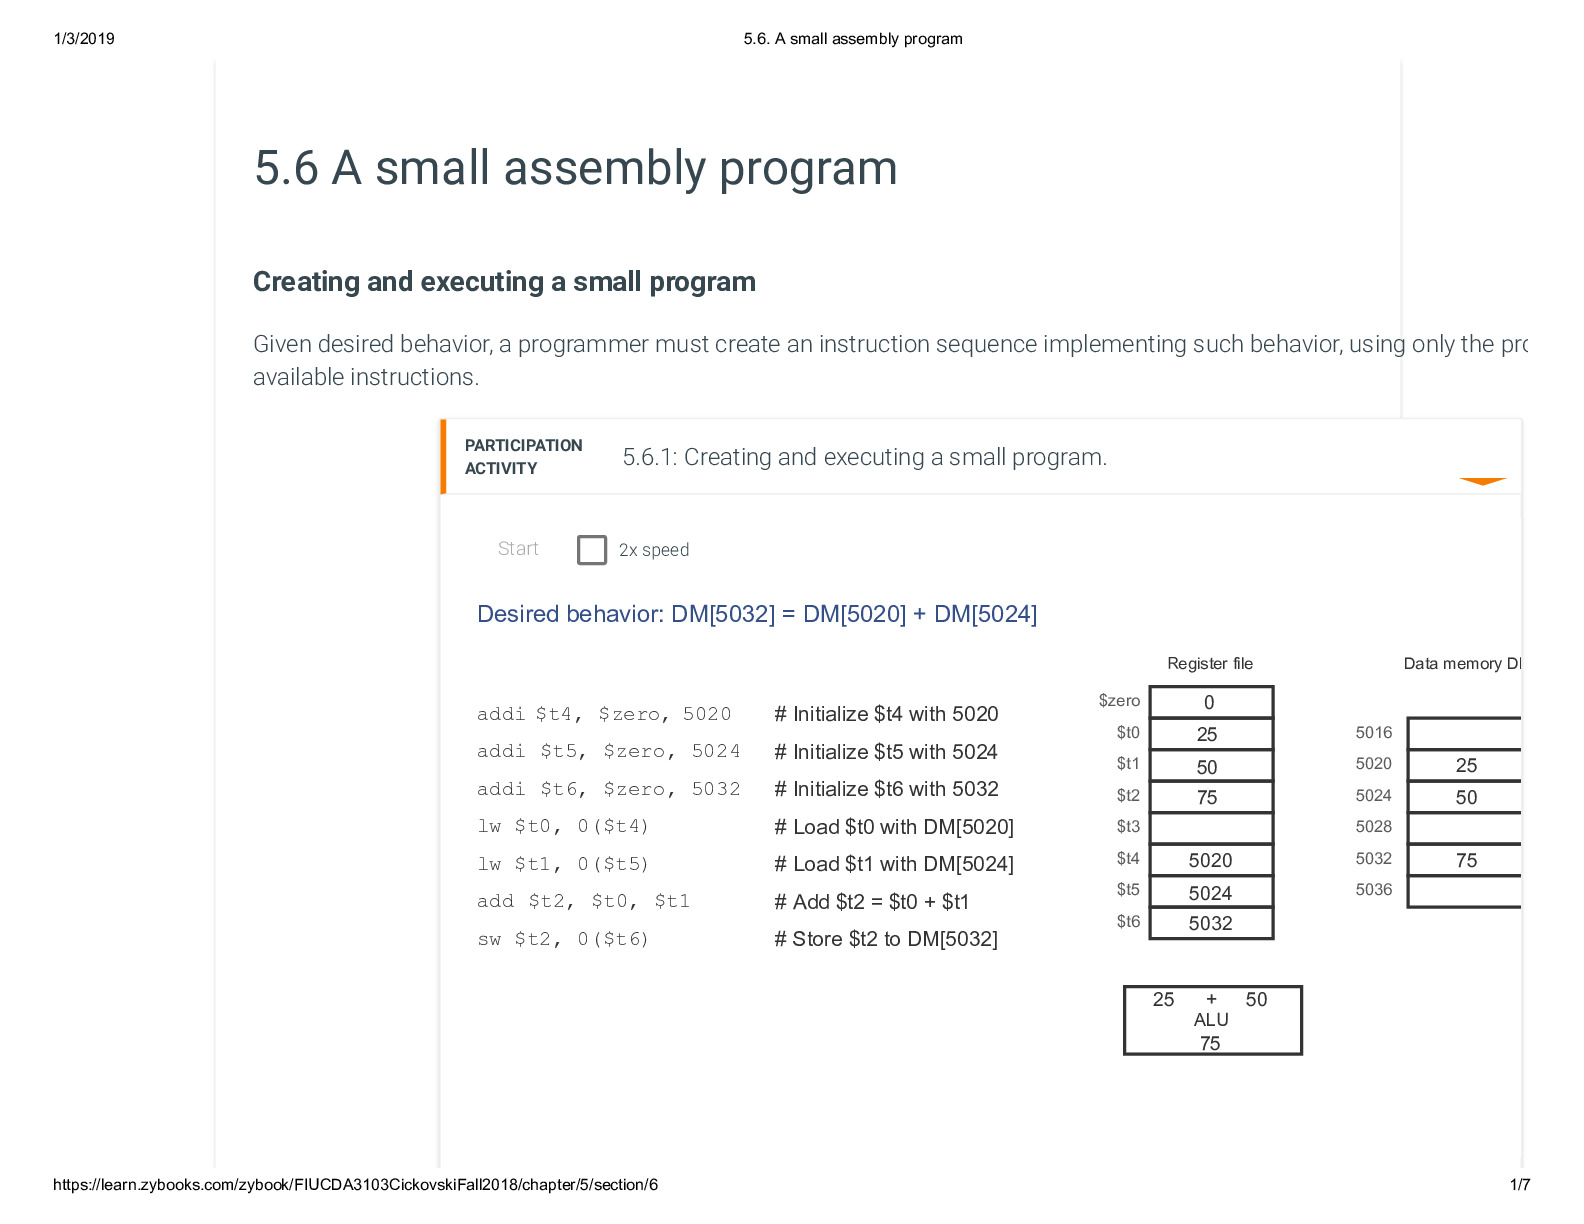 5.6. A small assembly program